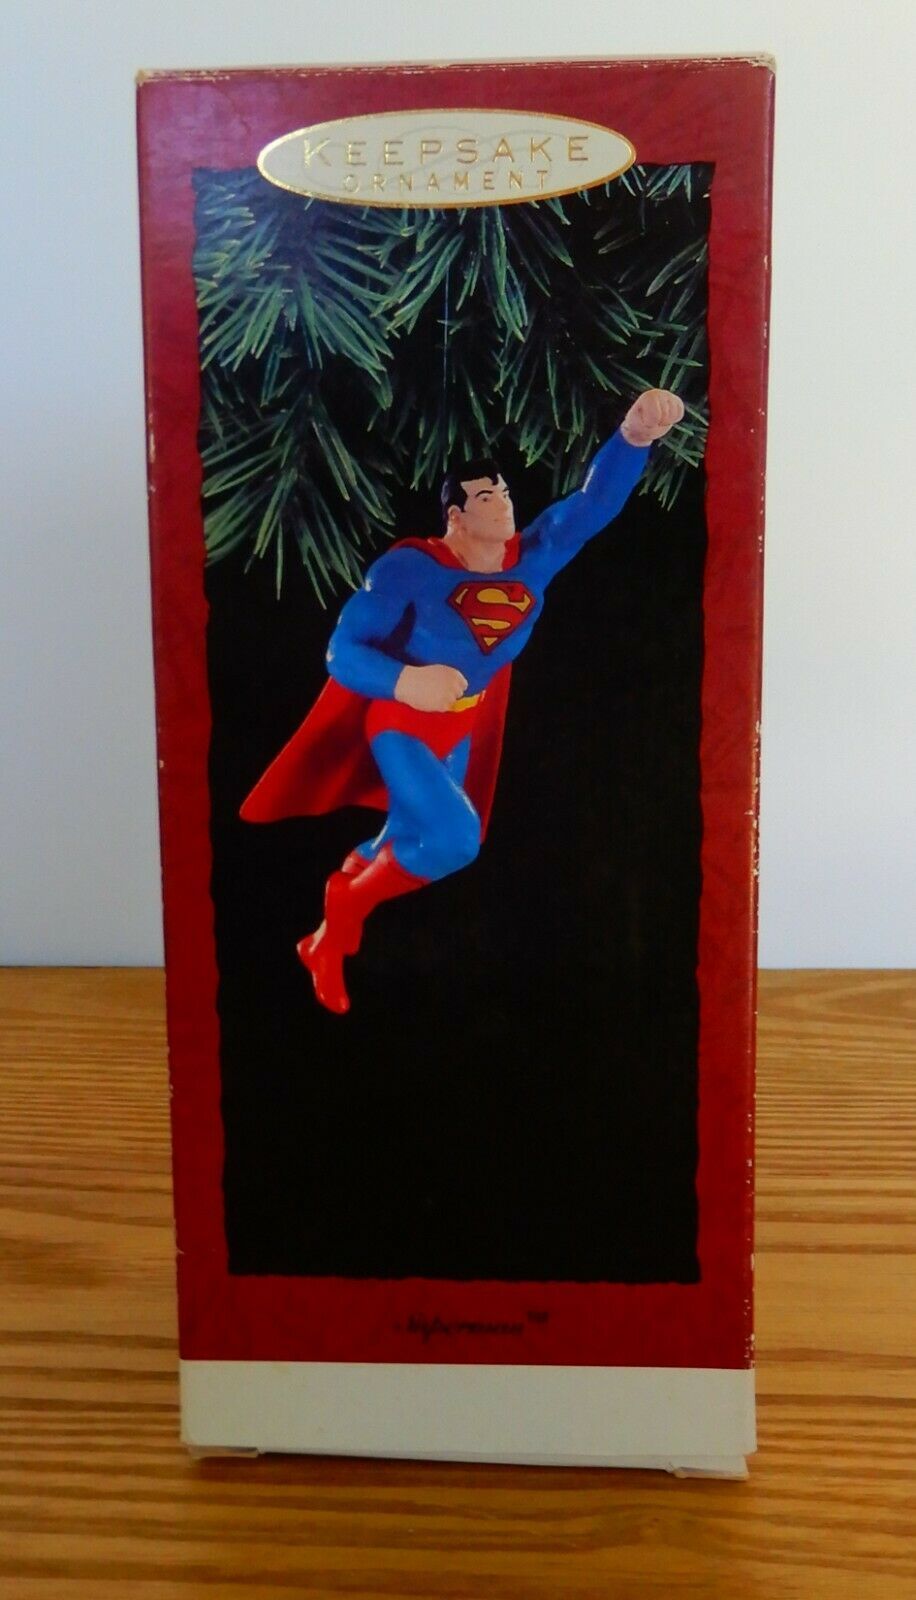 Primary image for Hallmark Keepsake Ornament 1993 Superman in original box